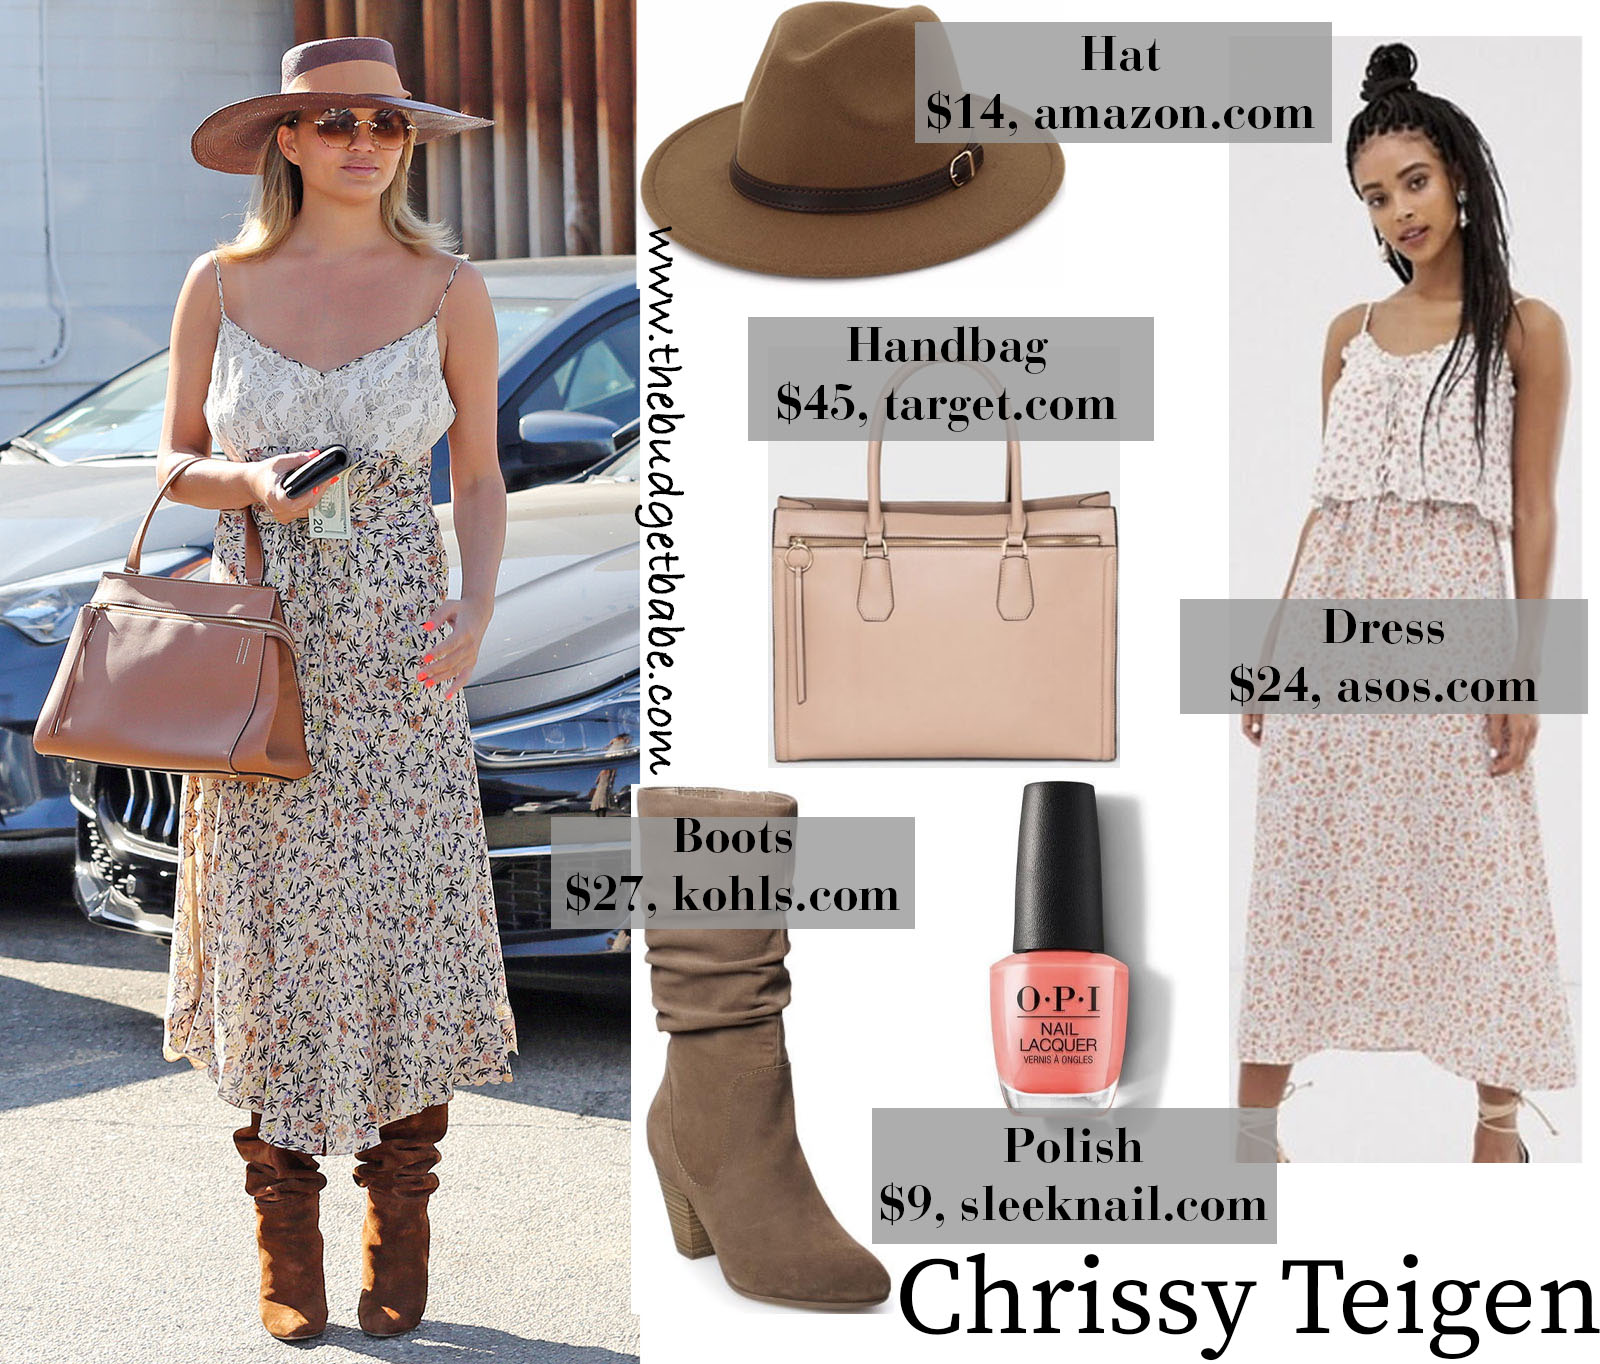 Chrissy Teigen's Floral Midi Dress, Suede Boots, and Wide Brim Hat